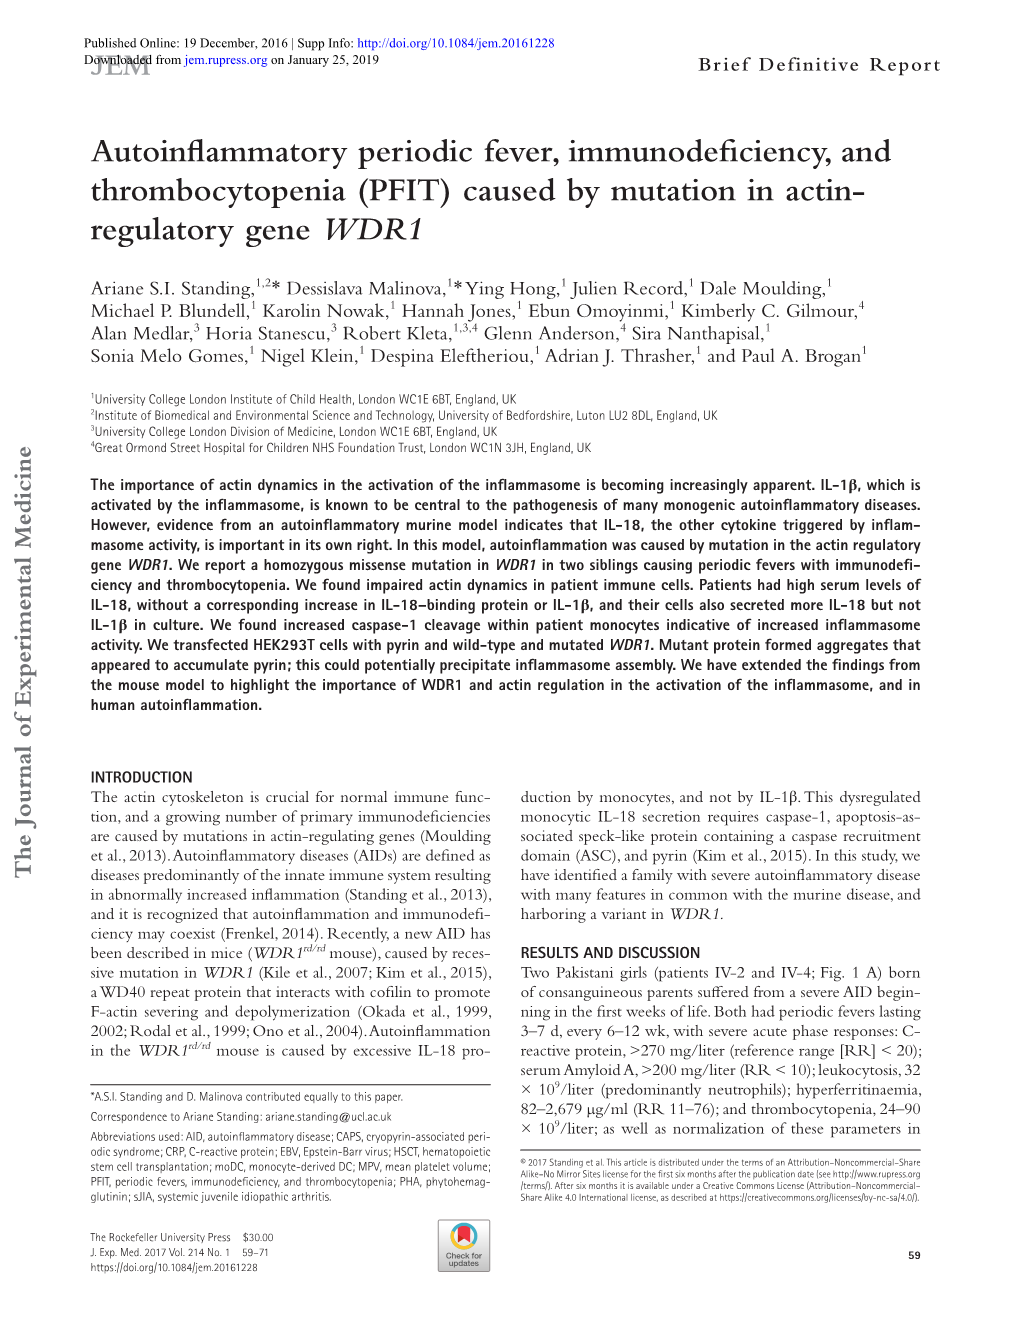 (PFIT) Caused by Mutation in Actin- Regulatory Gene WDR1